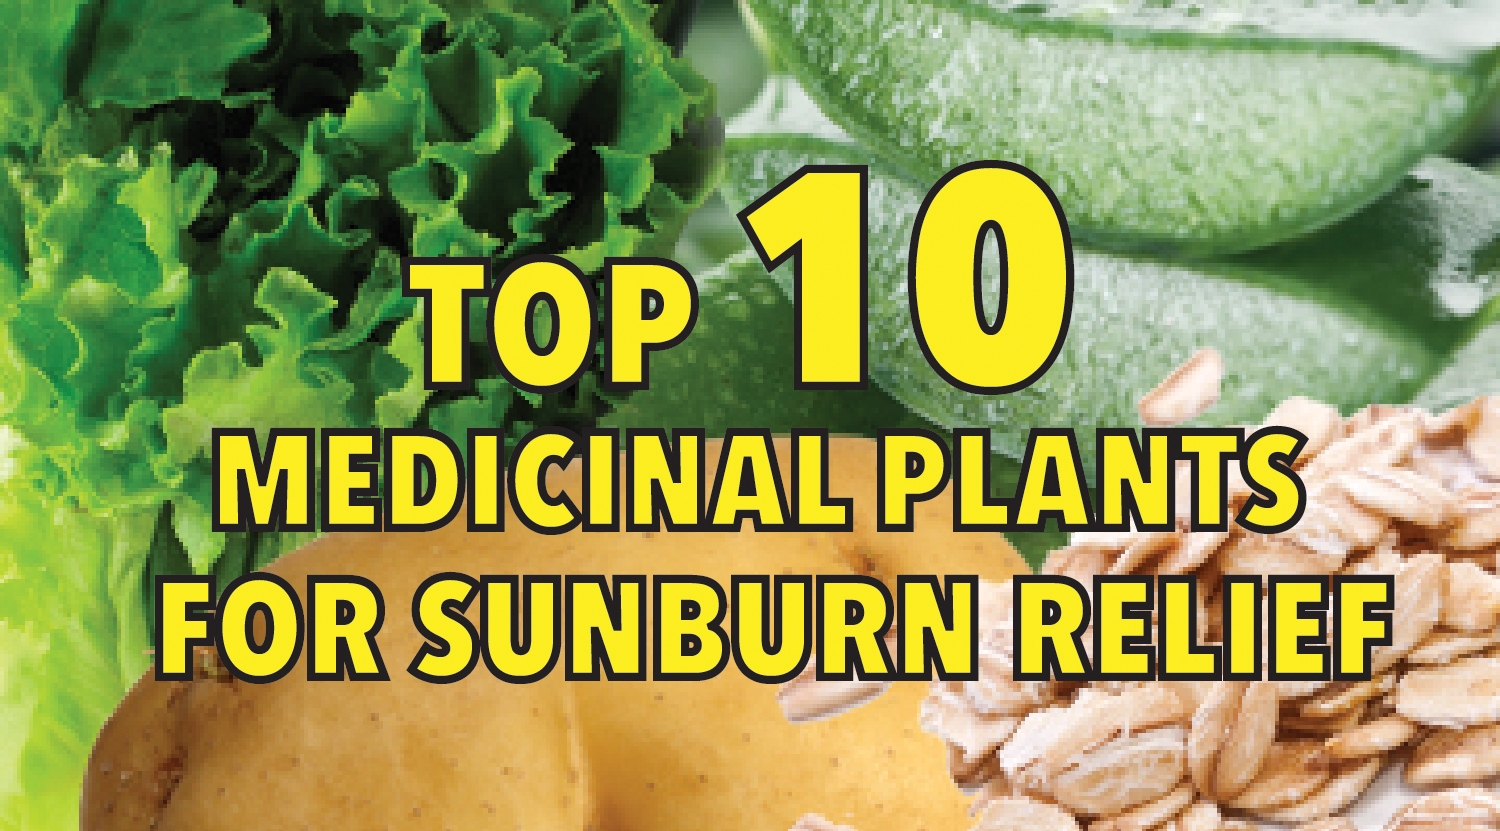 Top 10 medicinal plants for sunburn relief